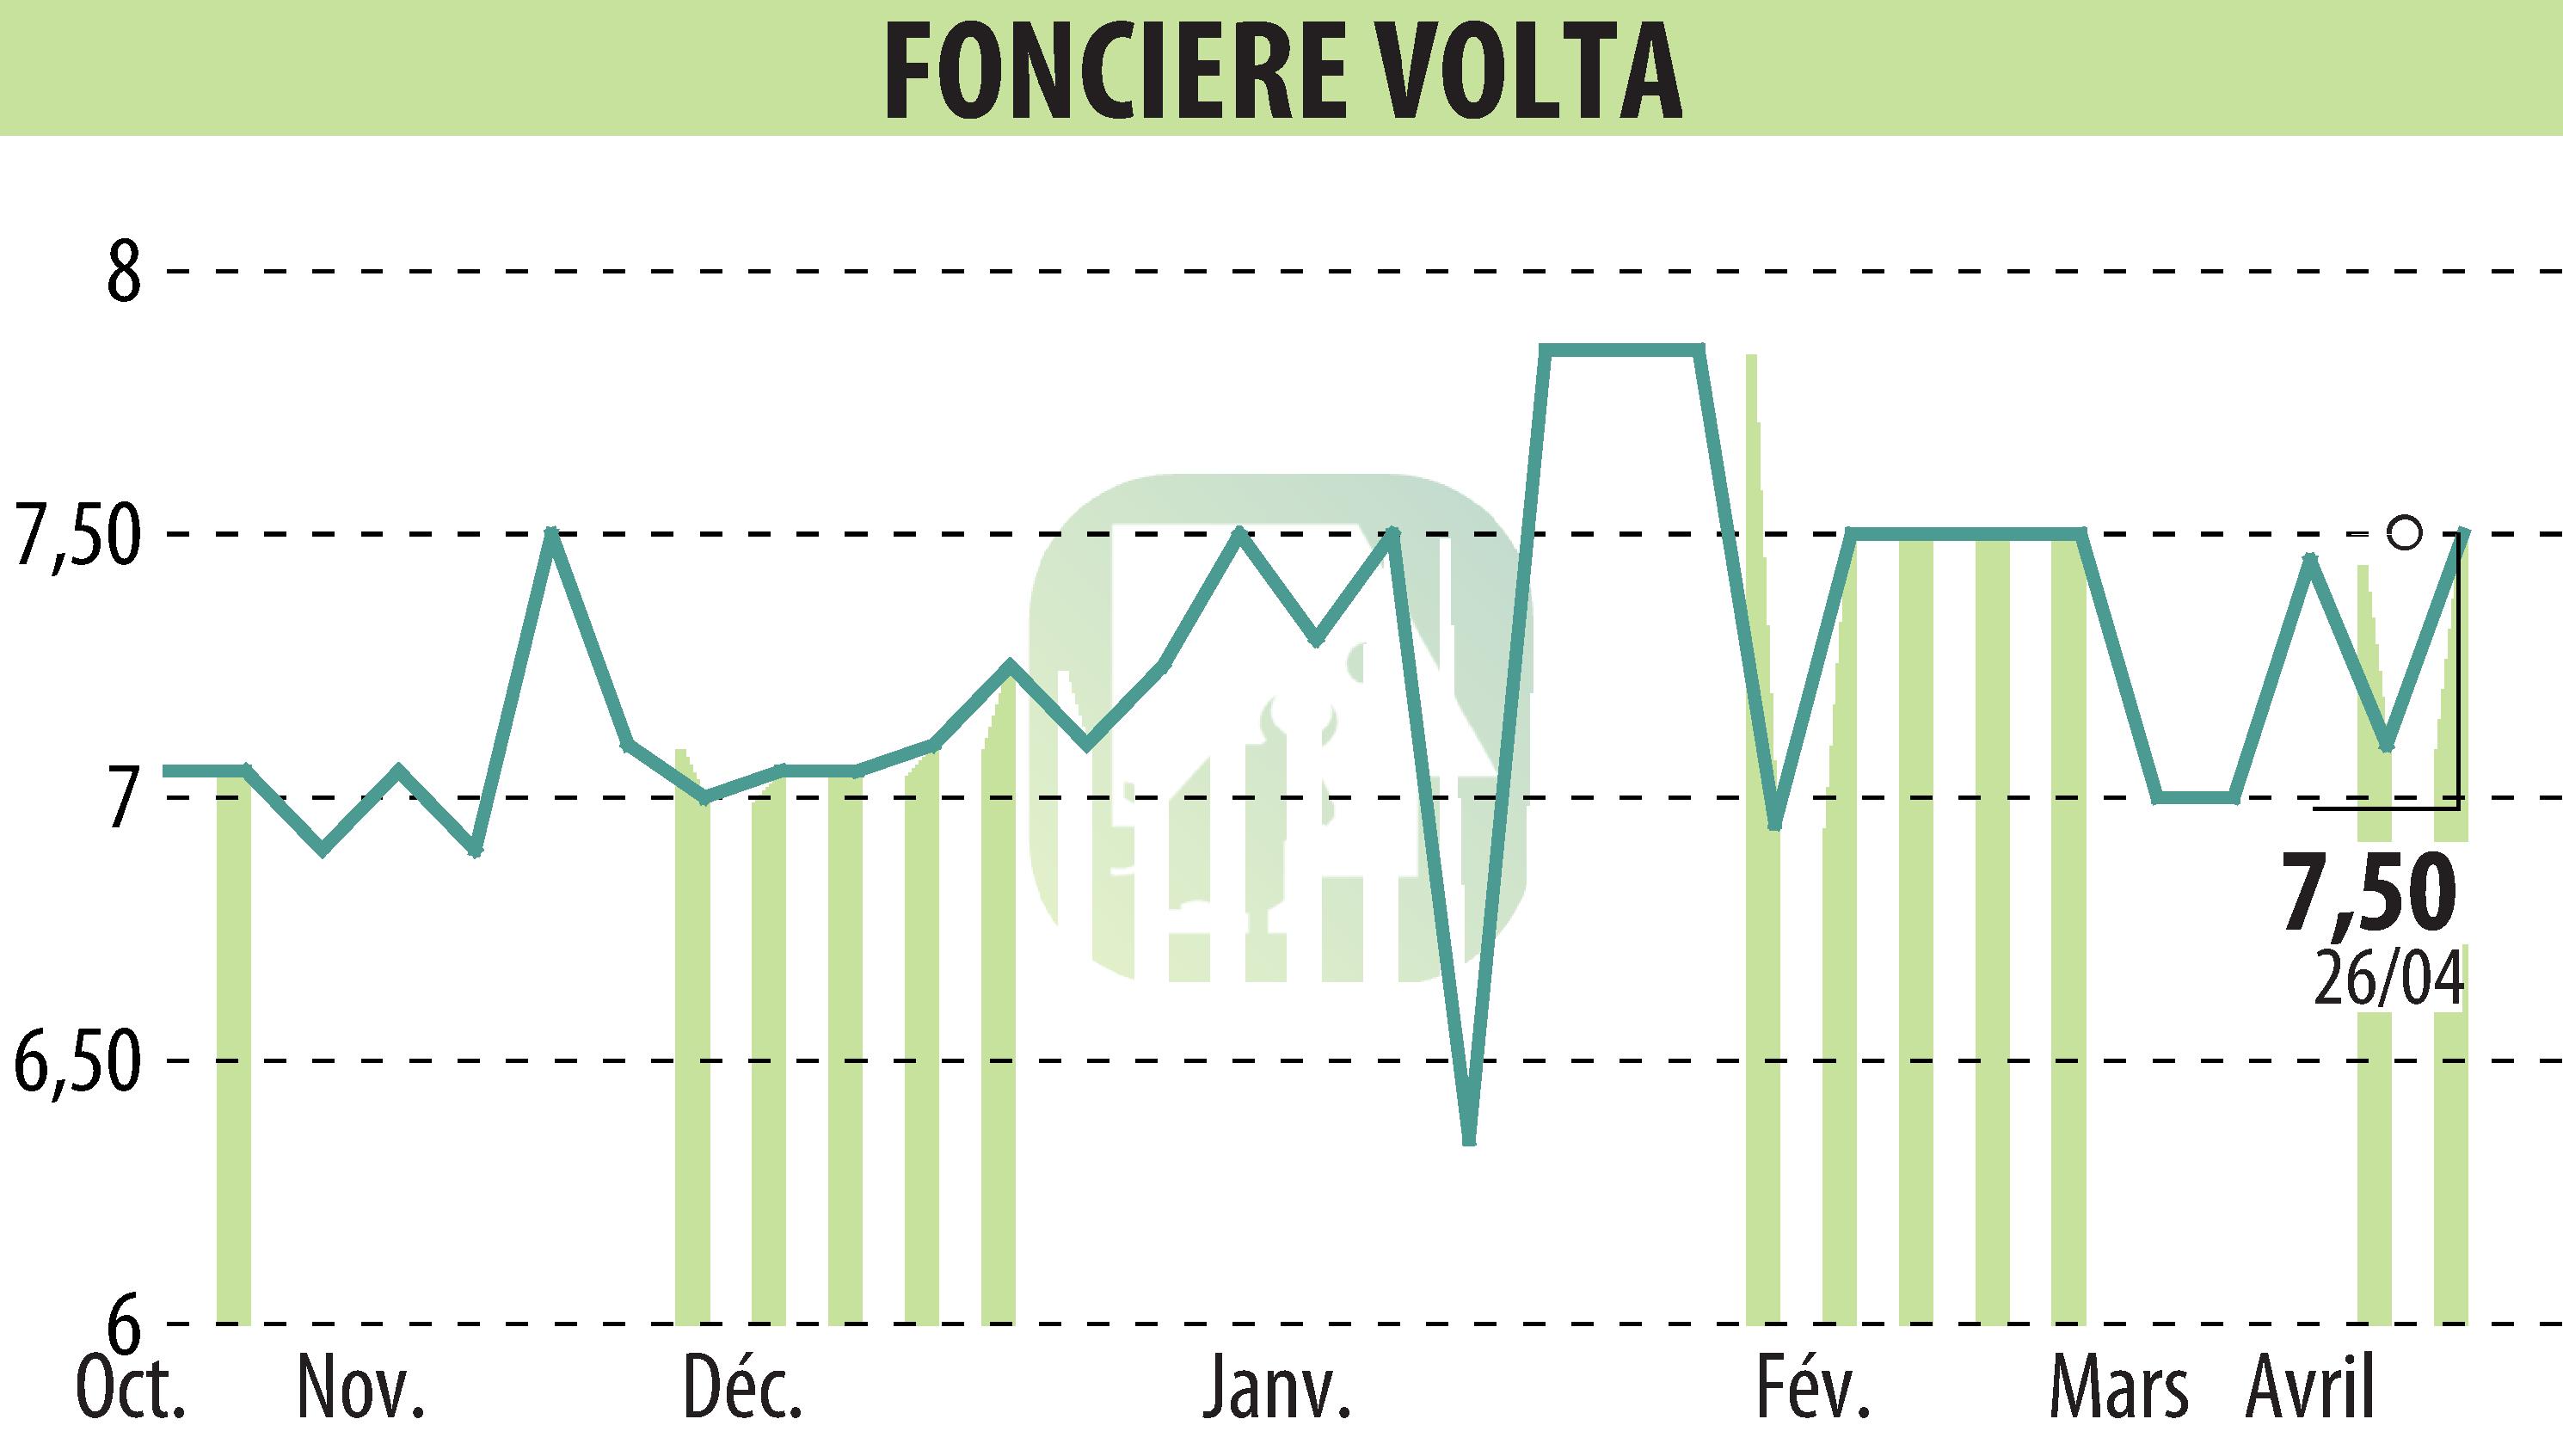 Stock price chart of FONCIERE VOLTA (EPA:SPEL) showing fluctuations.